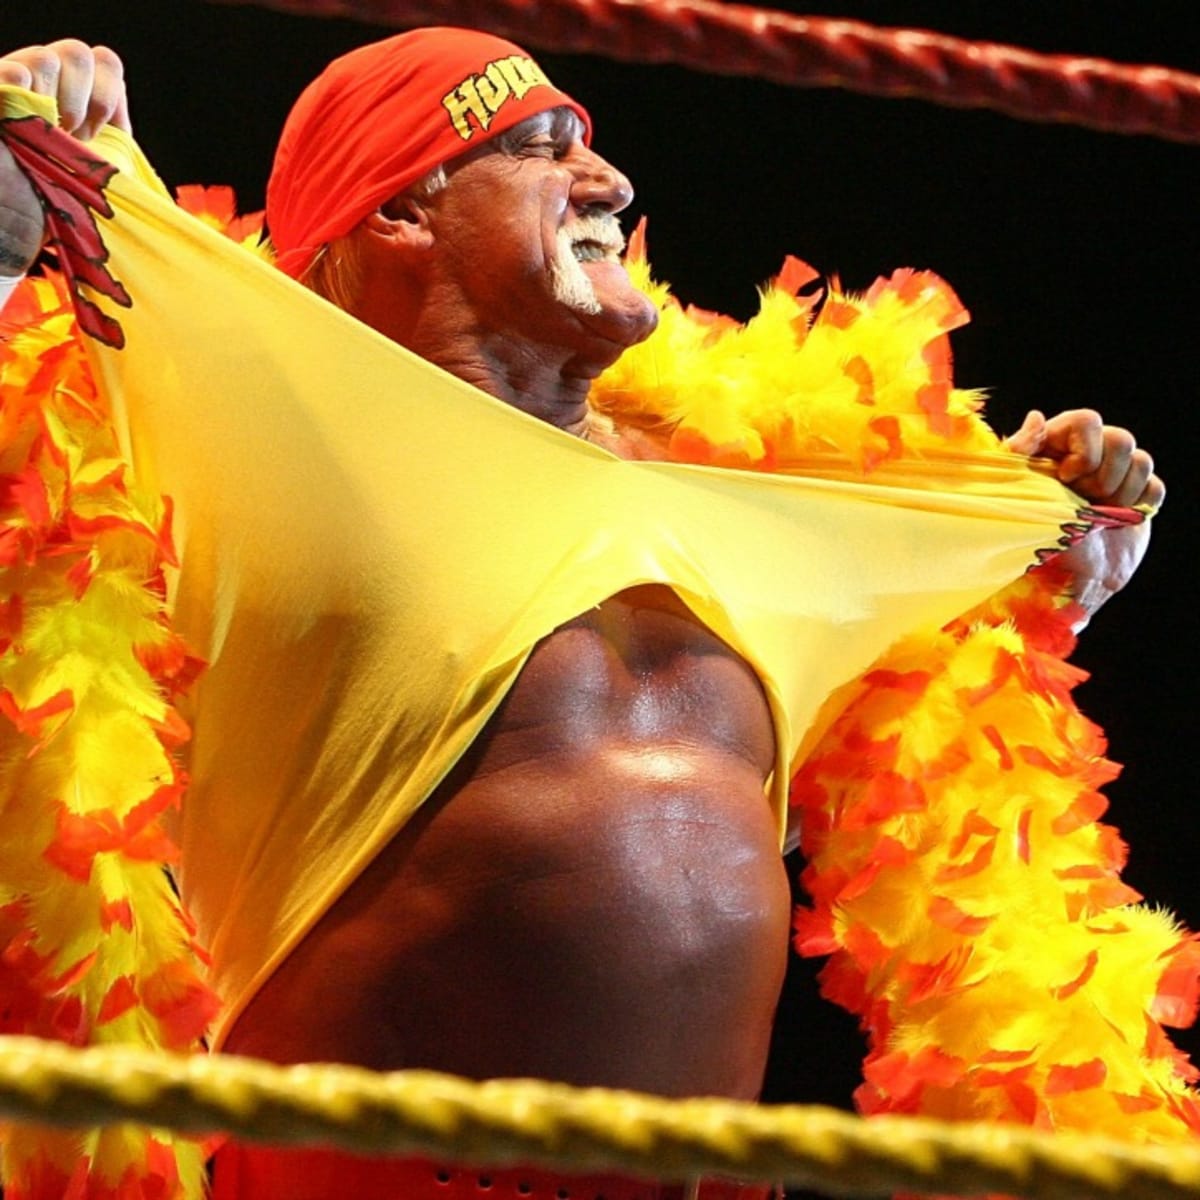 Hulk Hogan's 10 best culture moments - Sports Illustrated